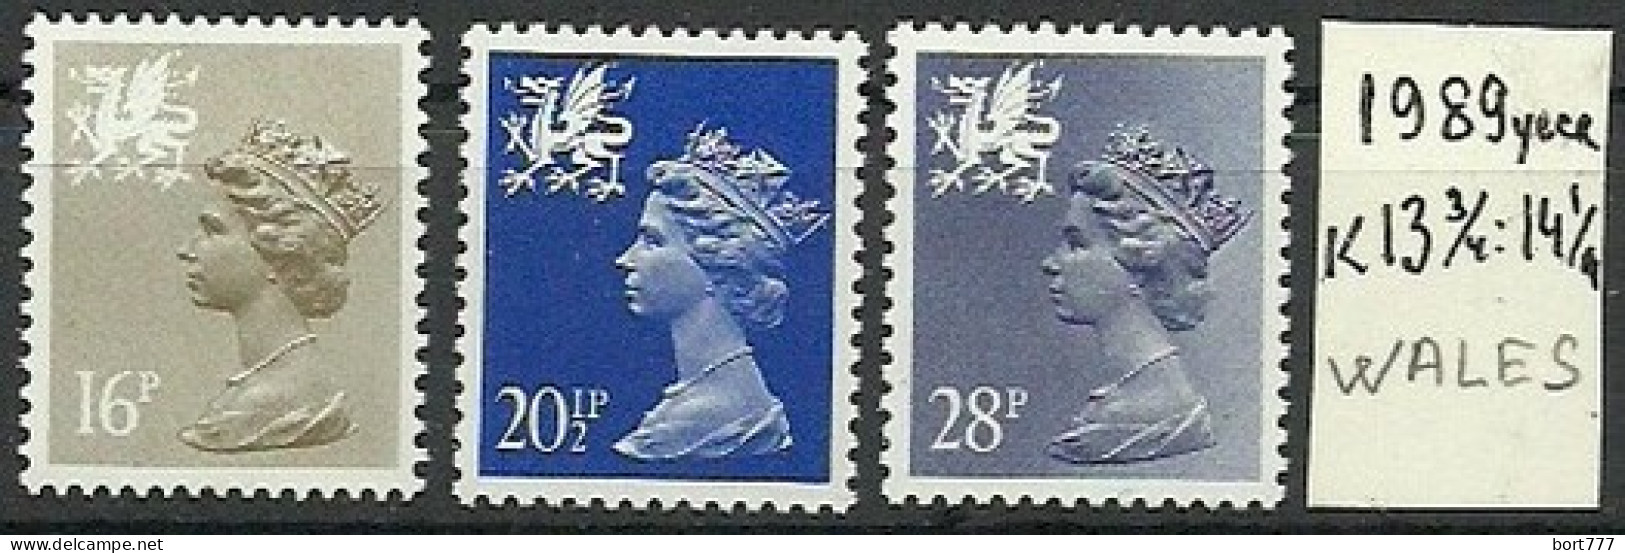 Wales 1989 Year, Mint Stamps MNH(**) Set  - Verzamelingen